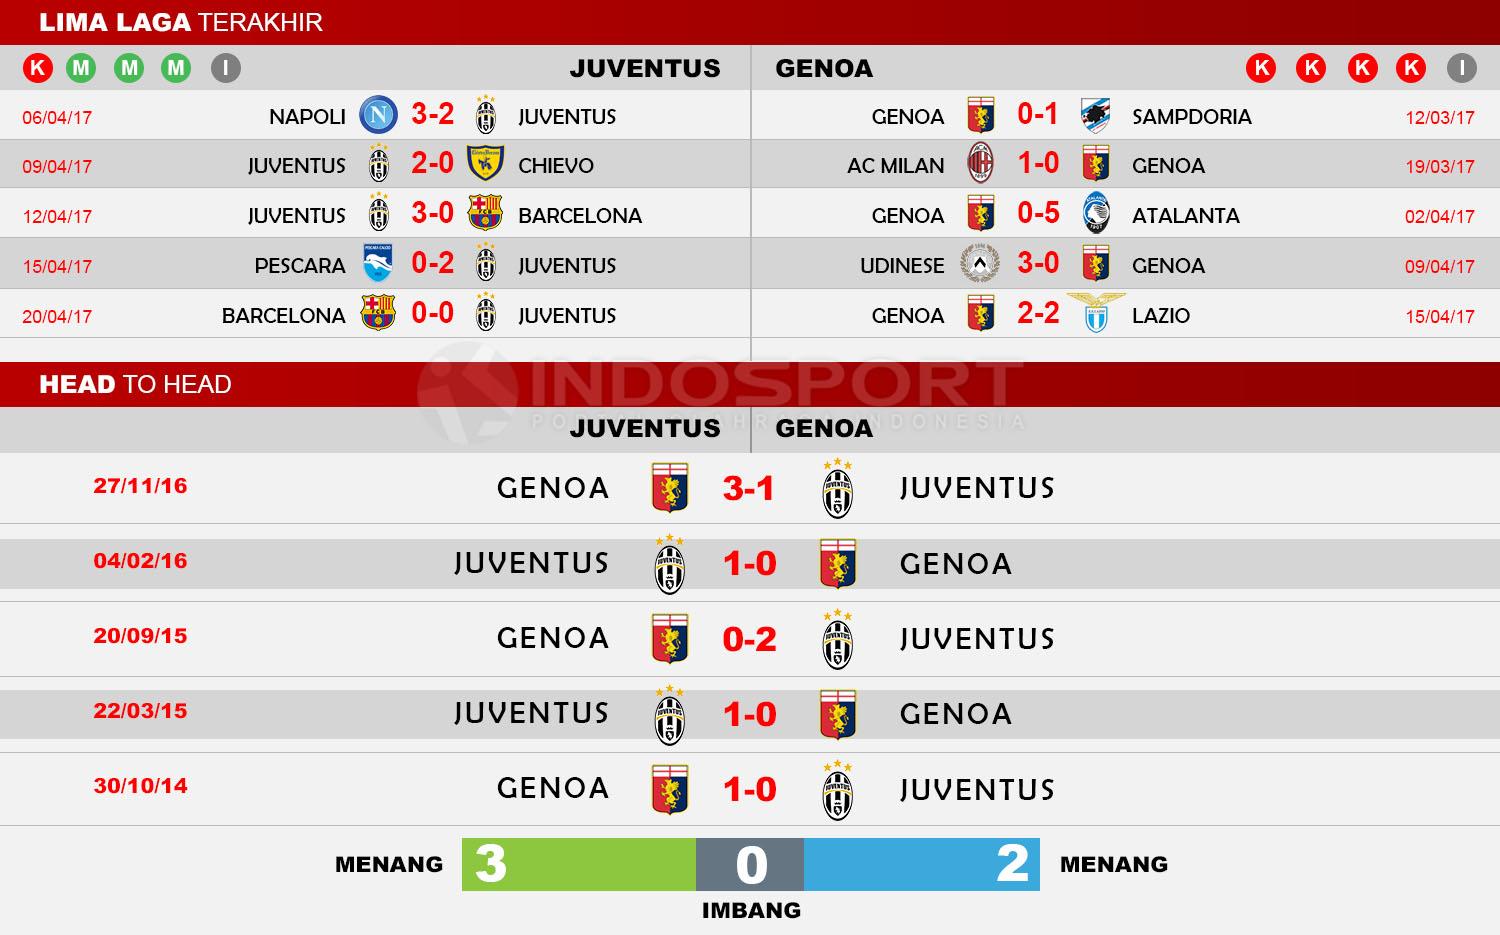 Head to Head Juventus vs Genoa Copyright: Indosport/Soccerway